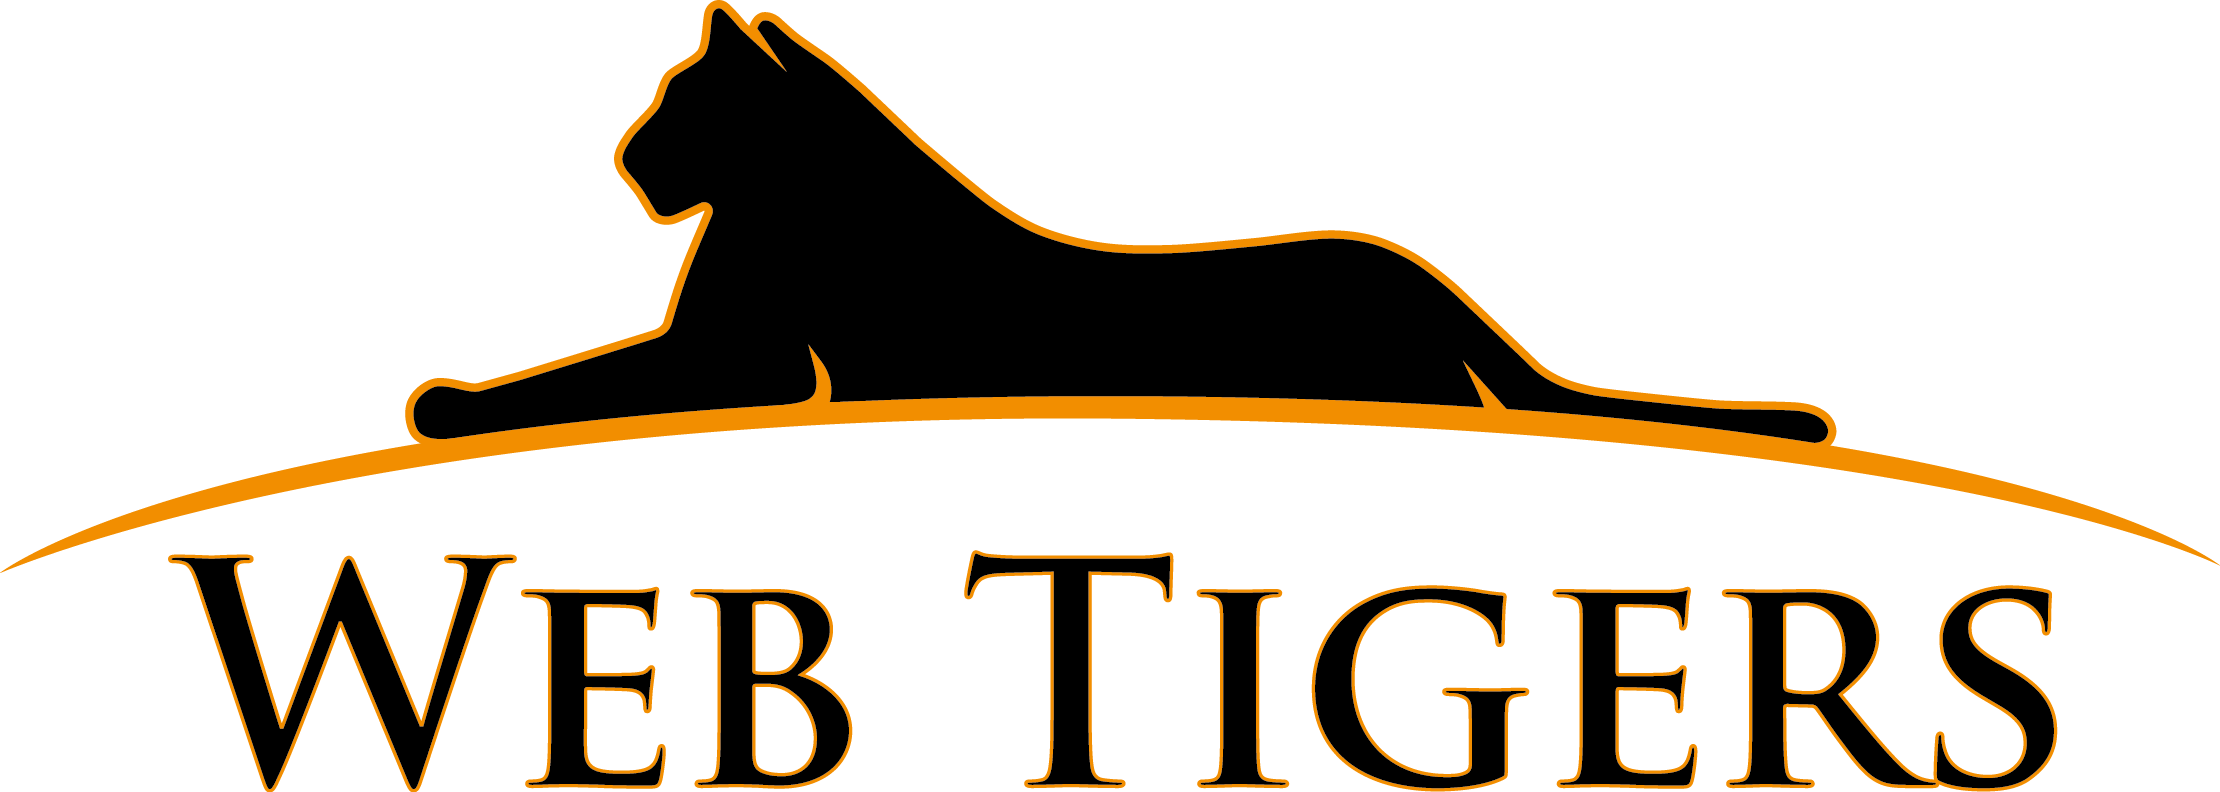 Web Tigers logo